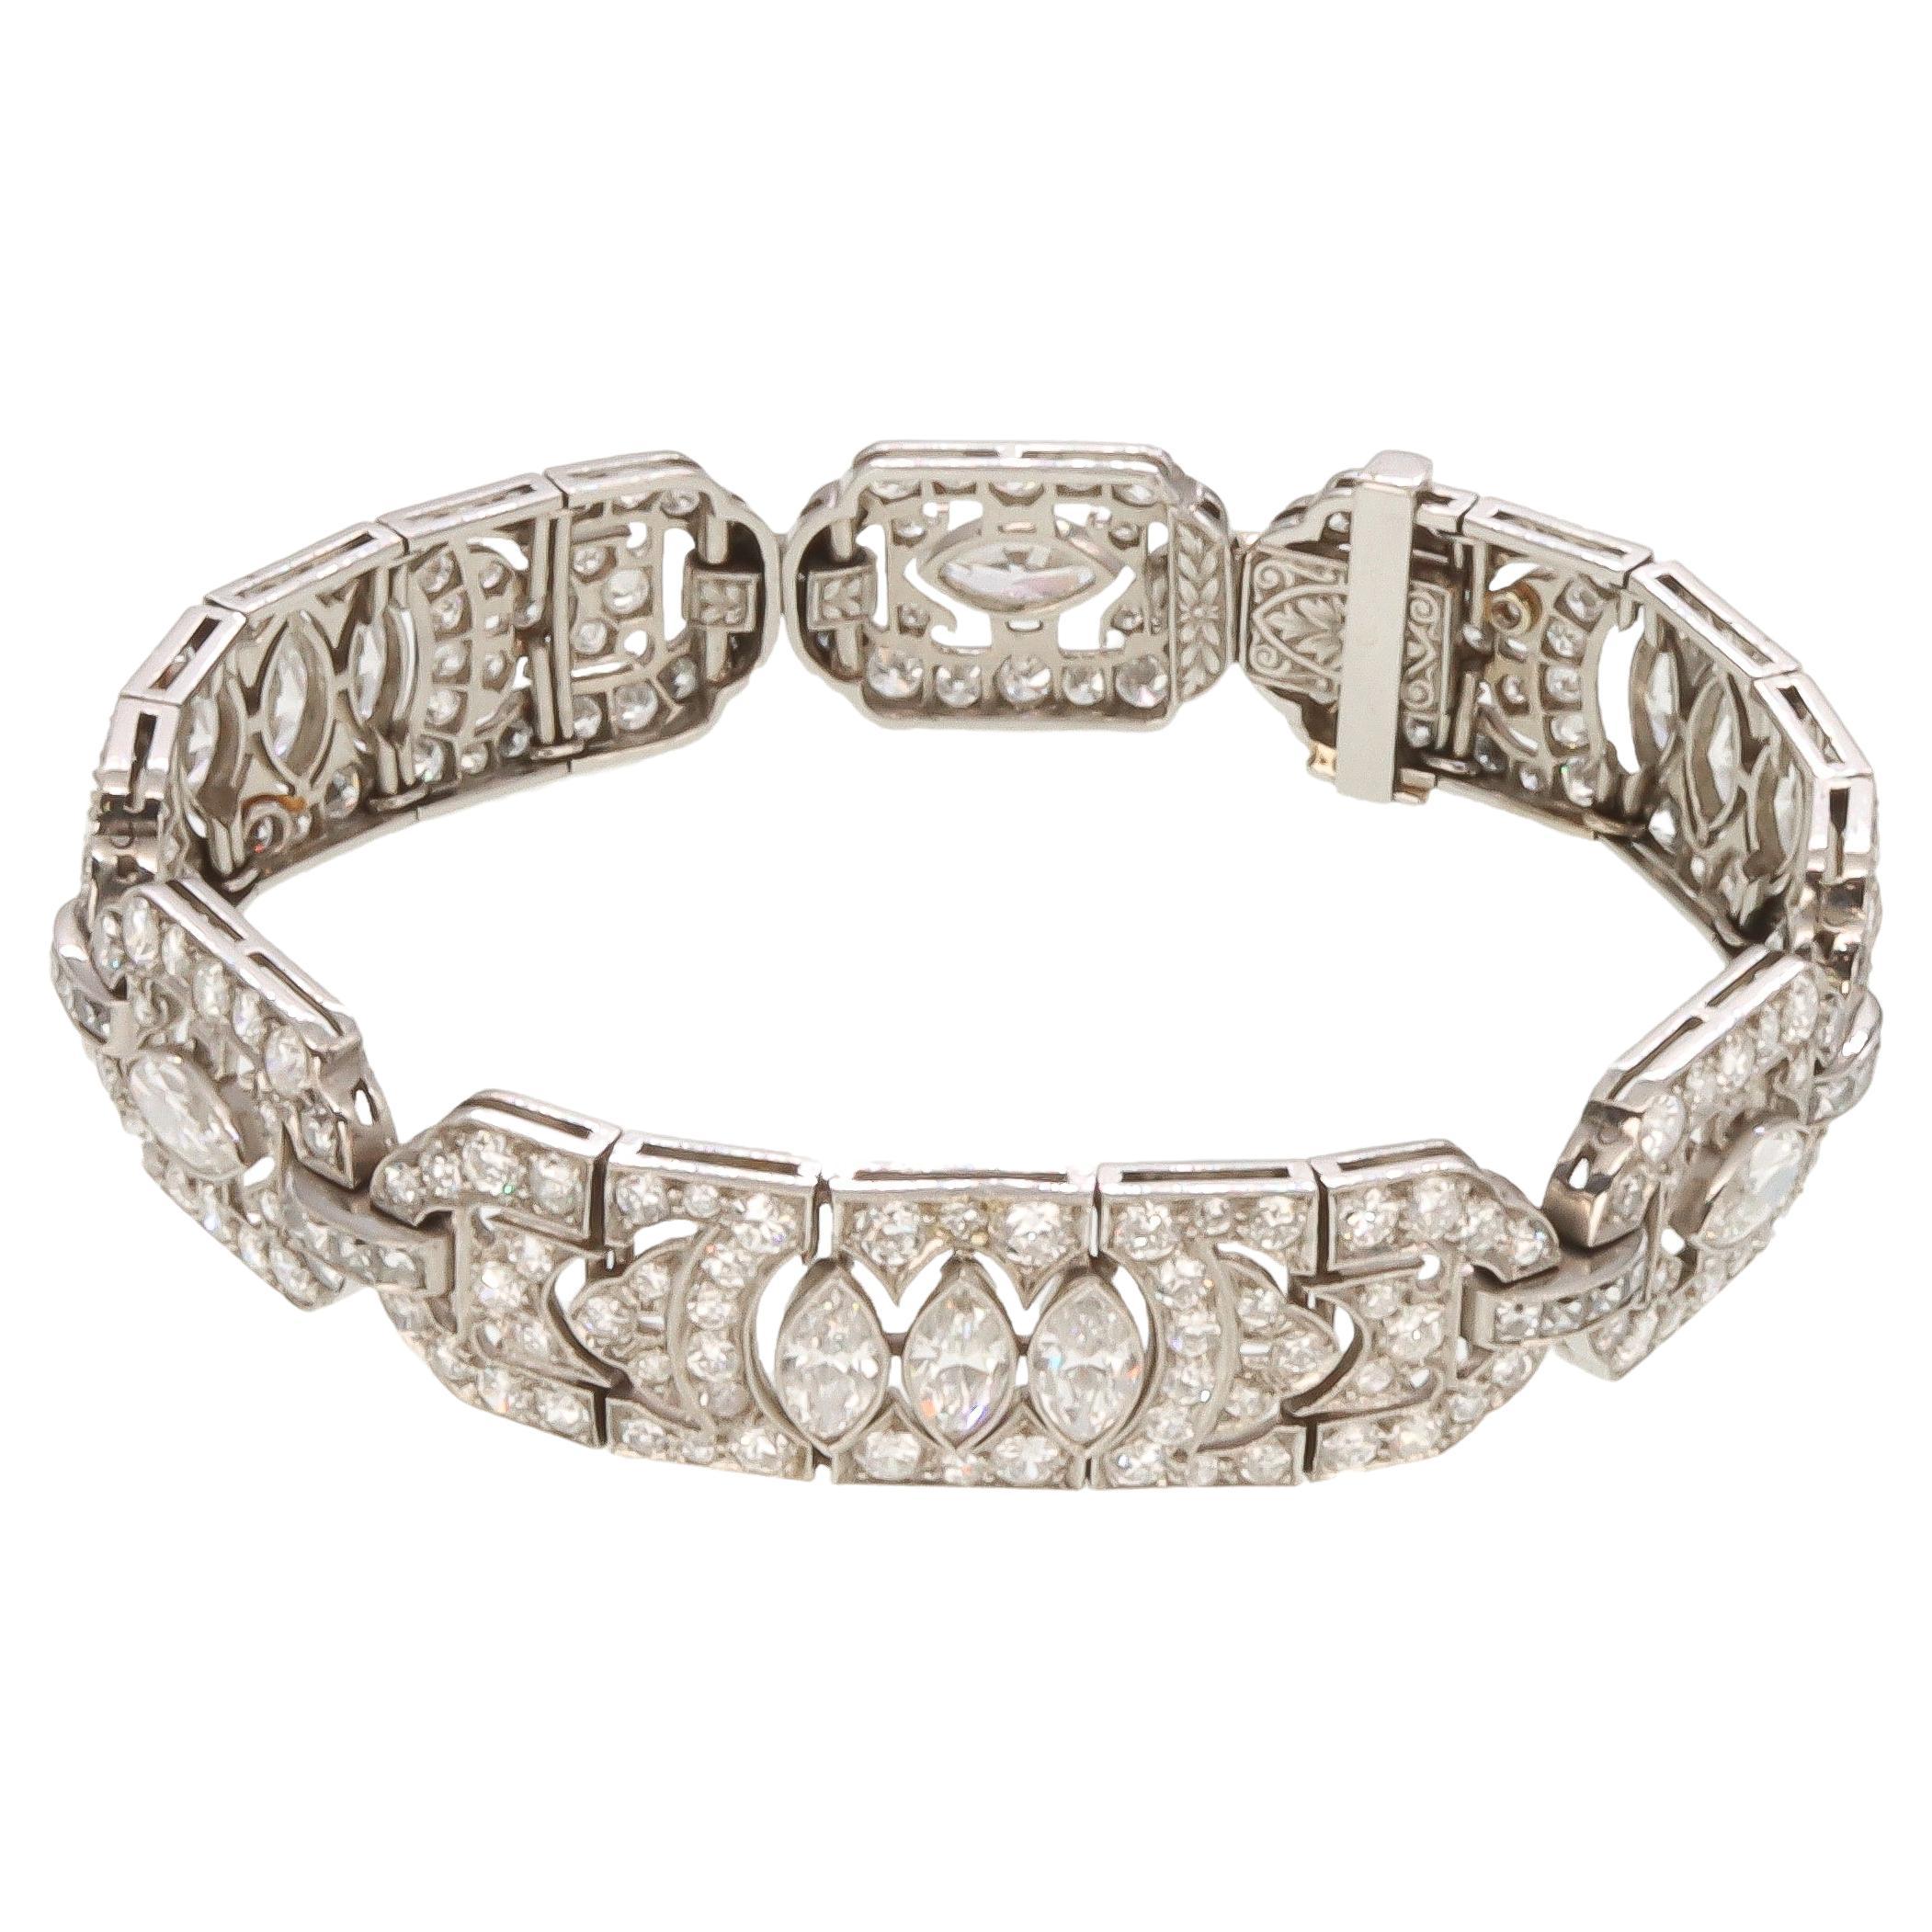 Tiffany & Co. Signed Art Deco Period 9 Carat Diamond and Platinum Bracelet For Sale